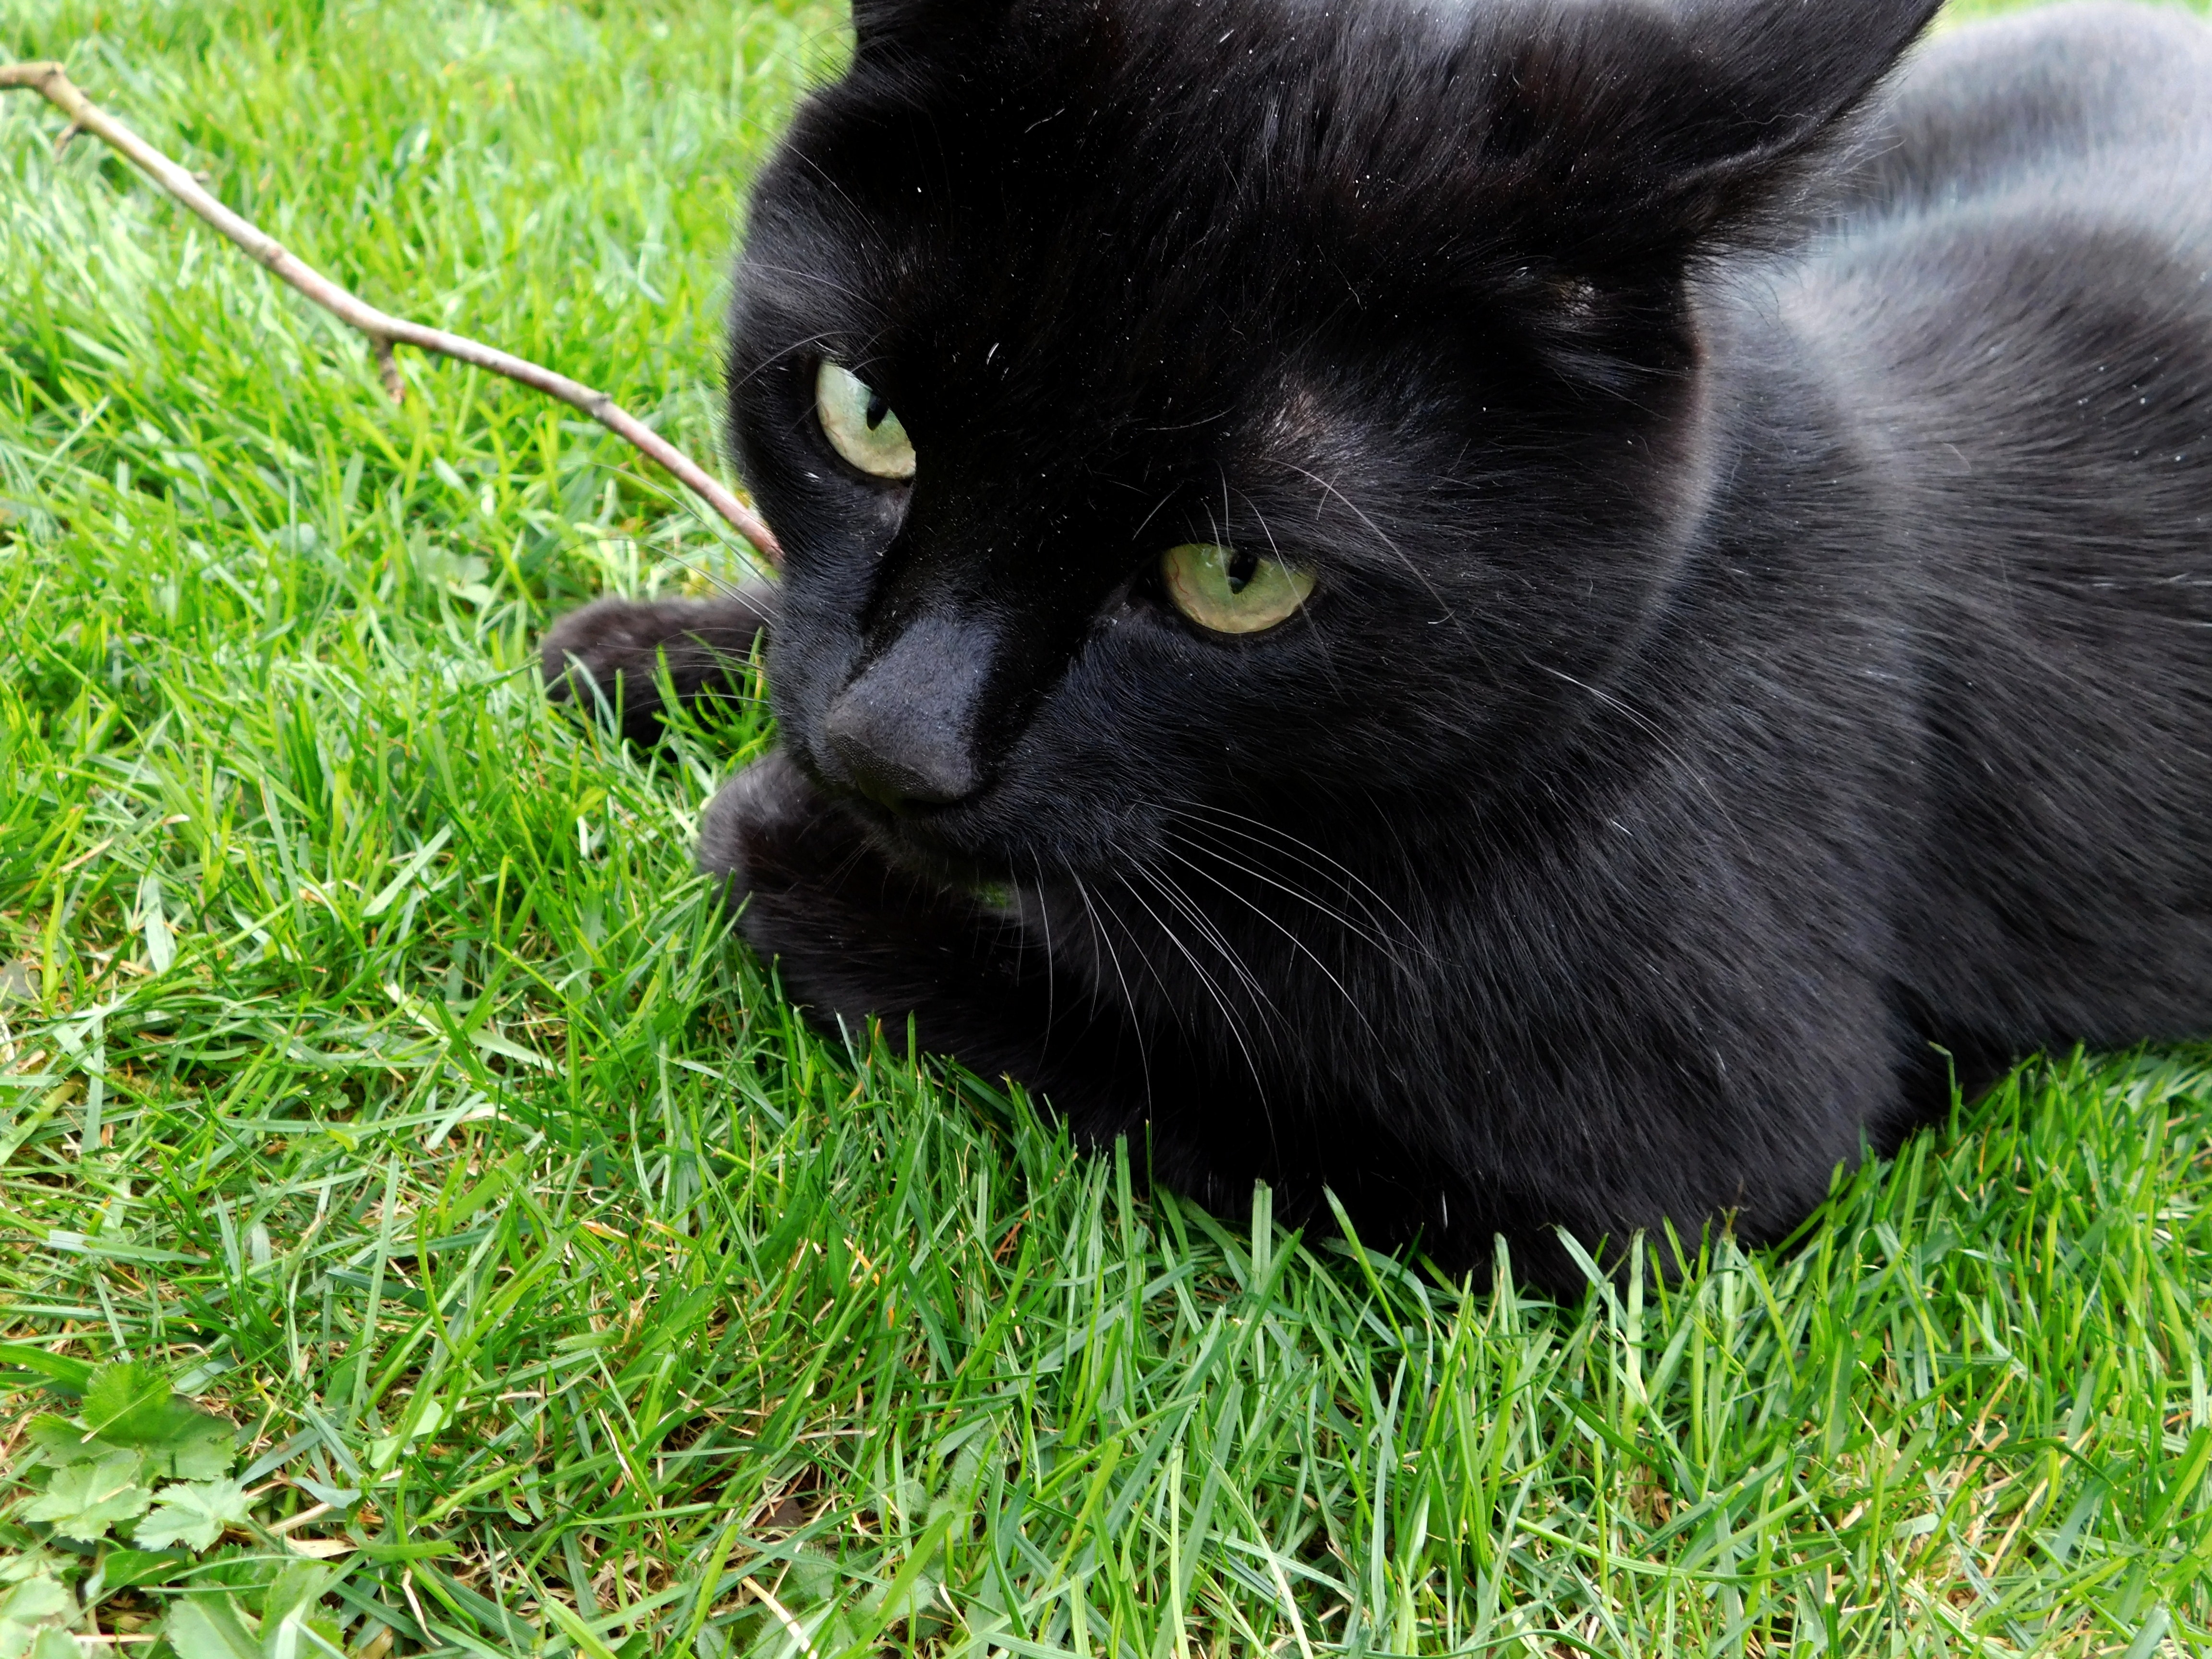 Bombay cat on grass field